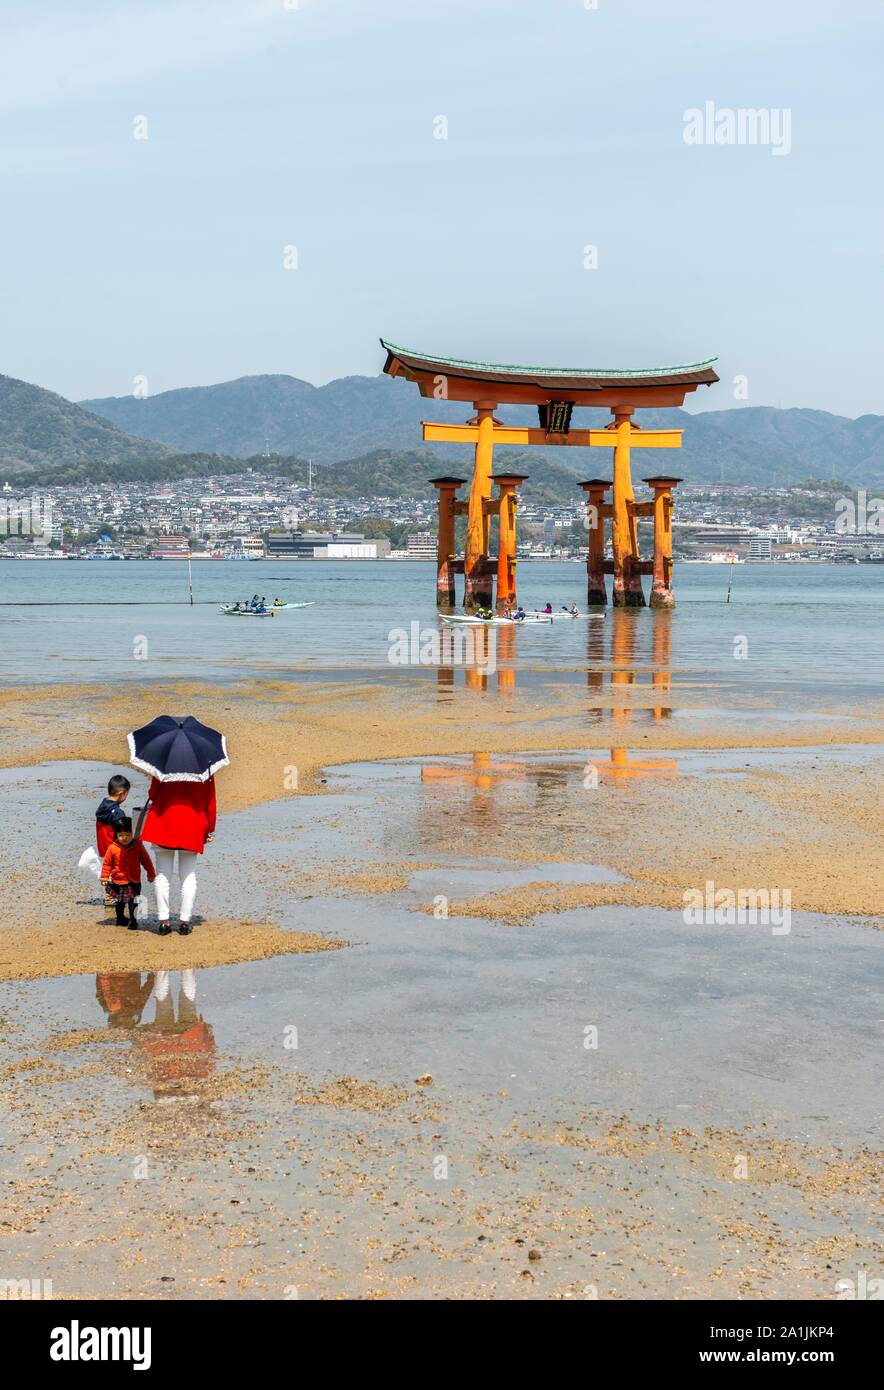 Itsukushima Floating Torii Gate in Water, Isukushima Shrine, Miyajima Island, Hiroshima Bay, Japan Stock Photo